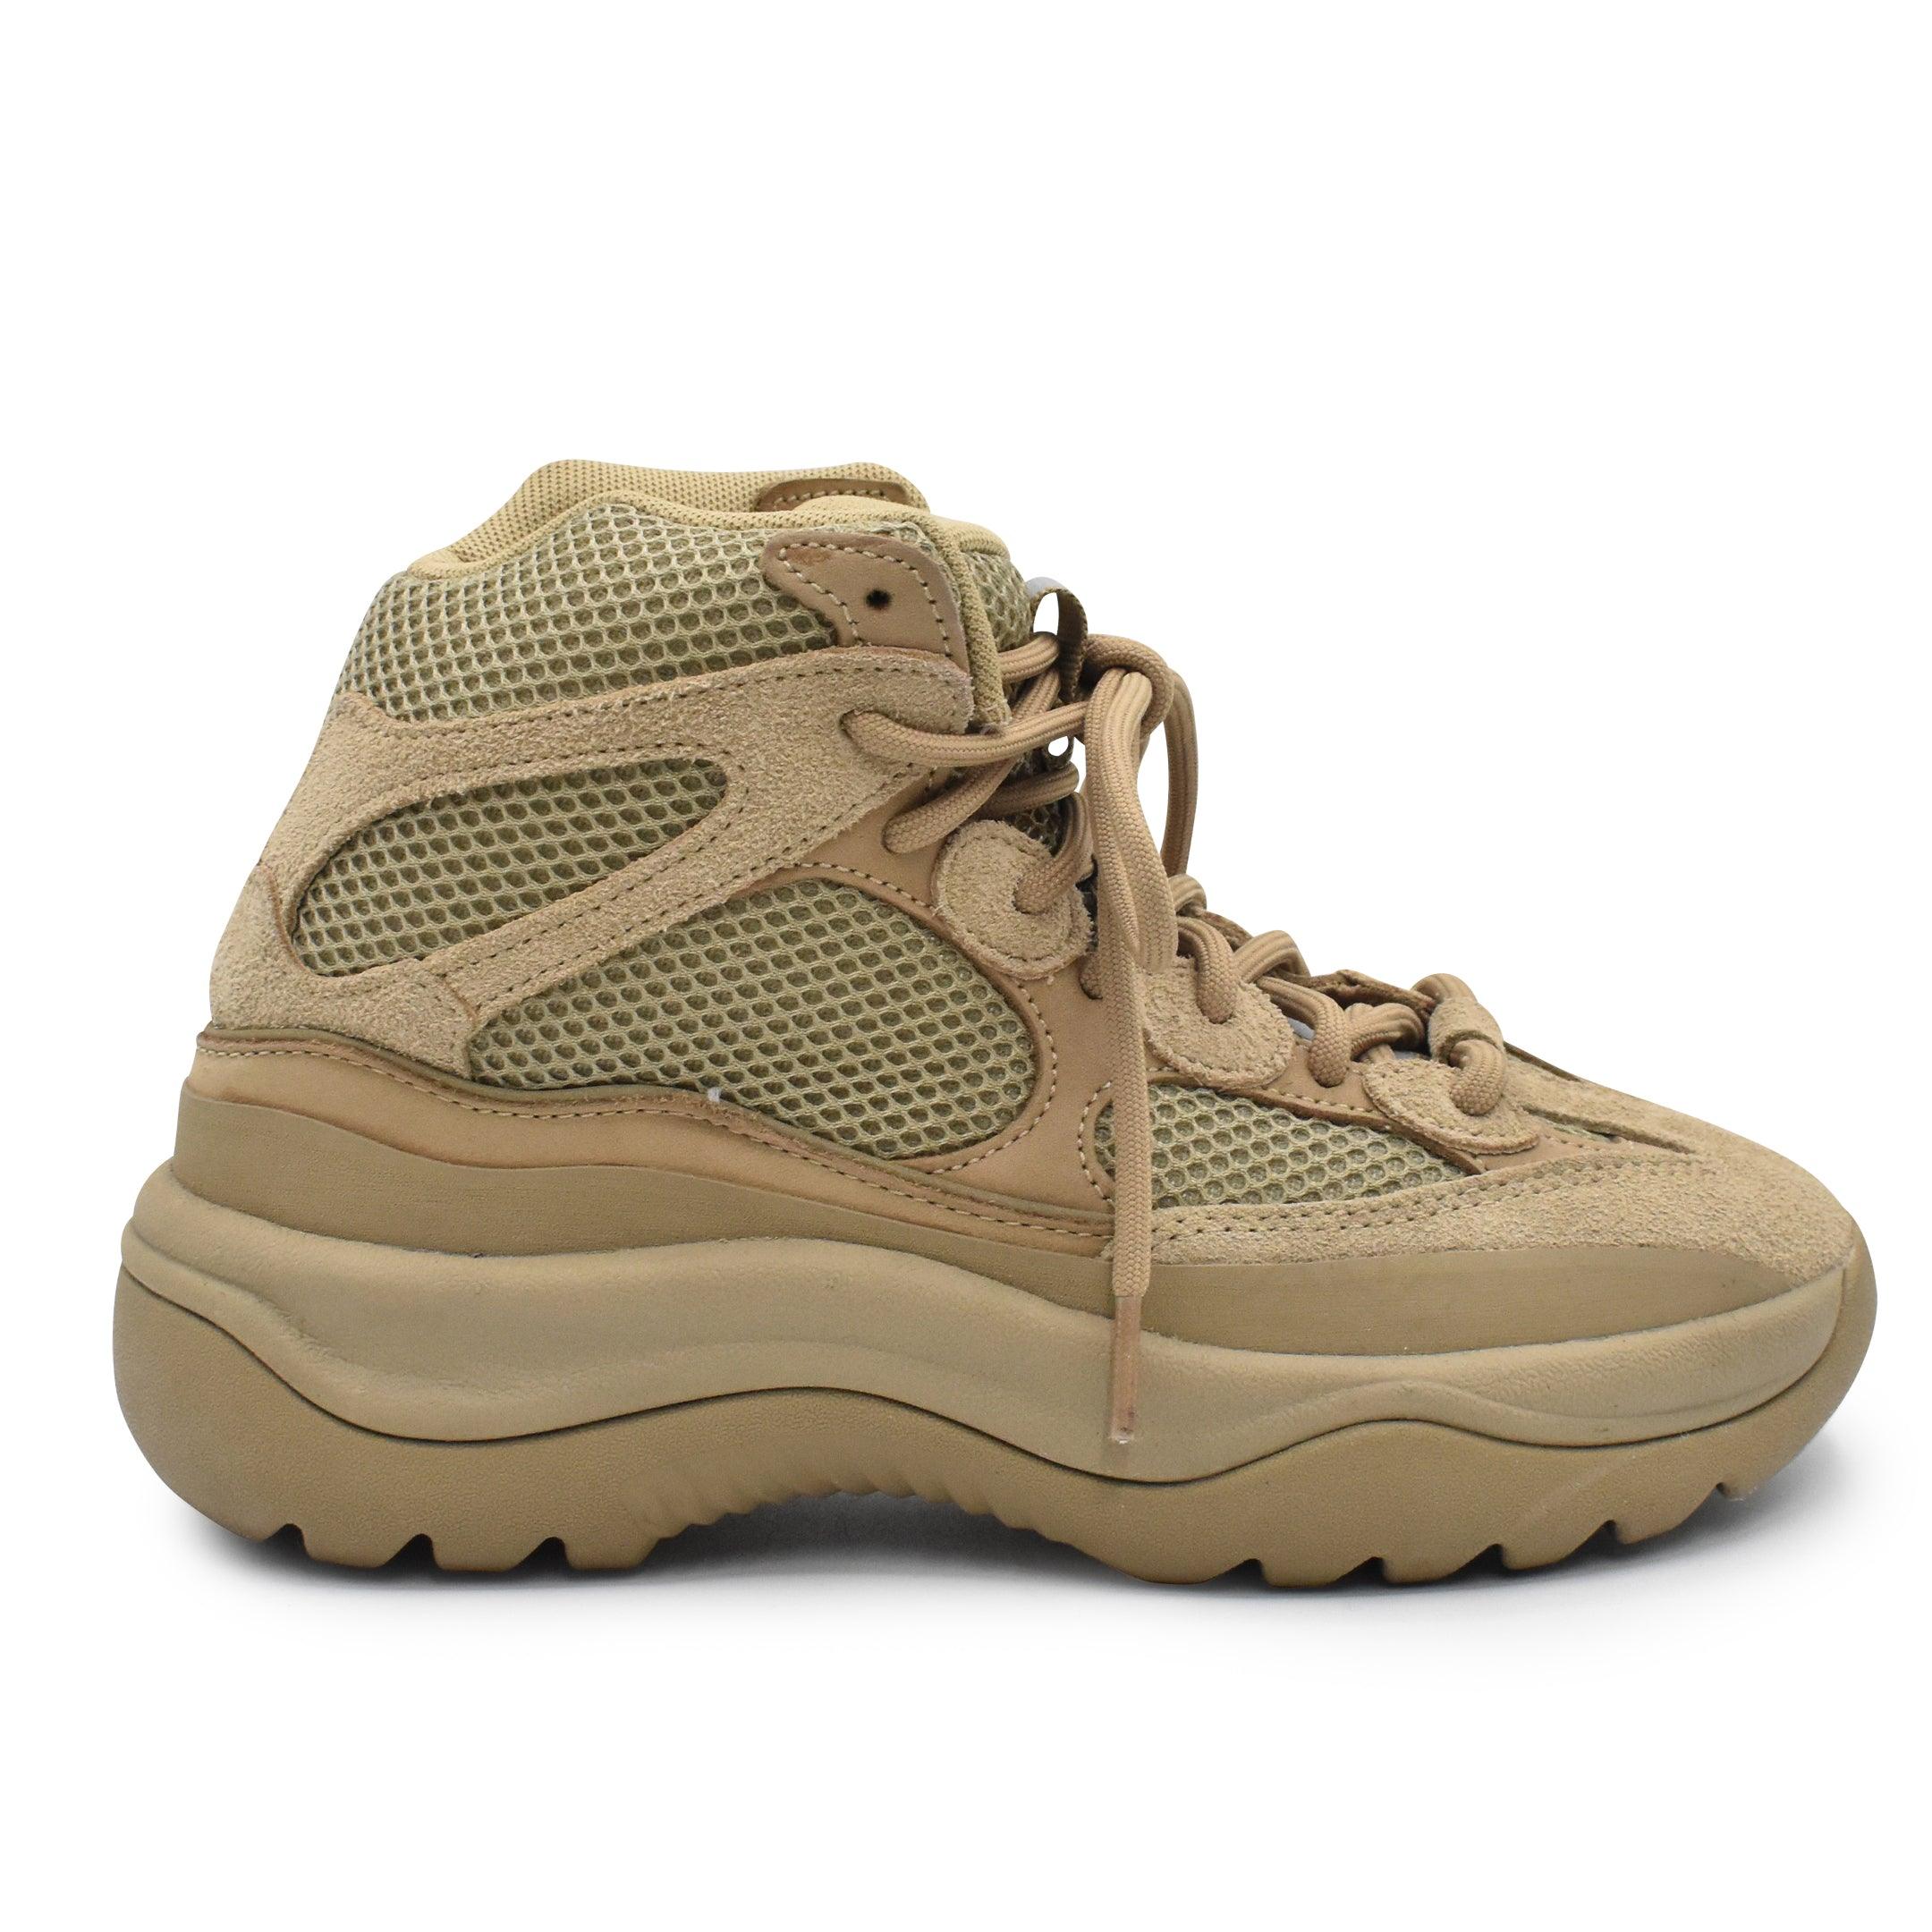 adidas Yeezy 'Desert Boot' - Men's 5.5/Women's 7 - Fashionably Yours